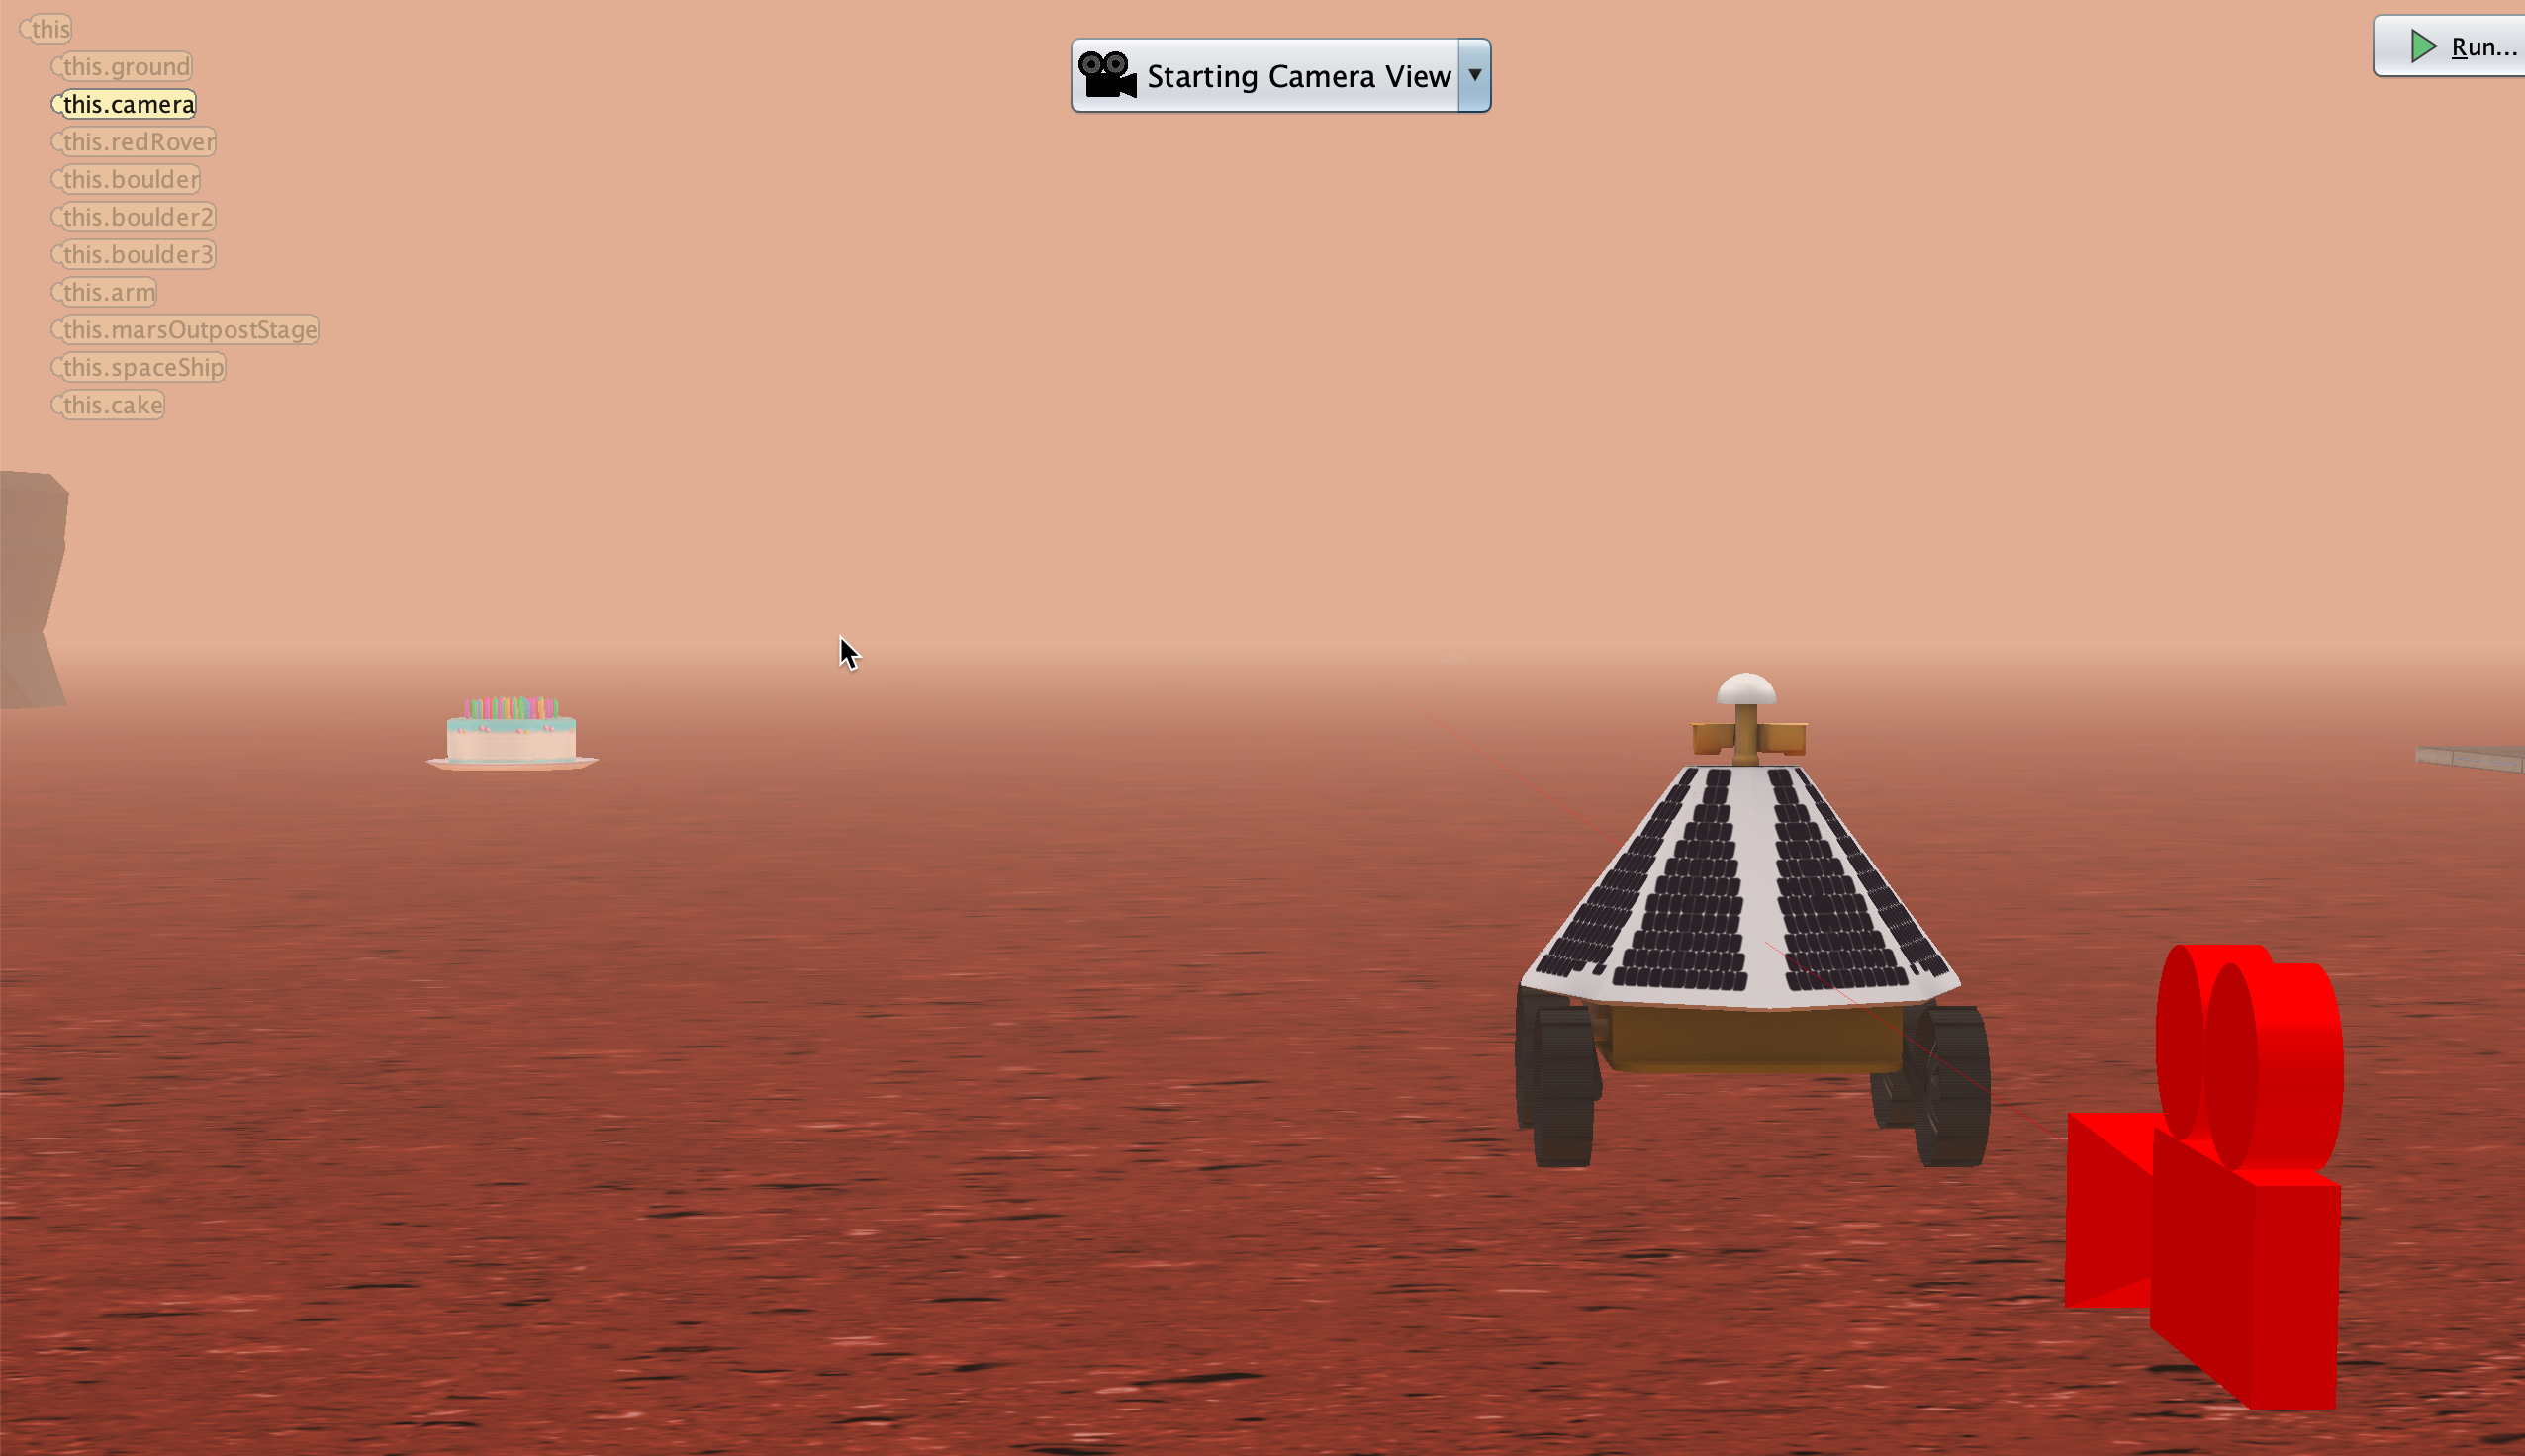 Mars Rover environment in the Scene Editor